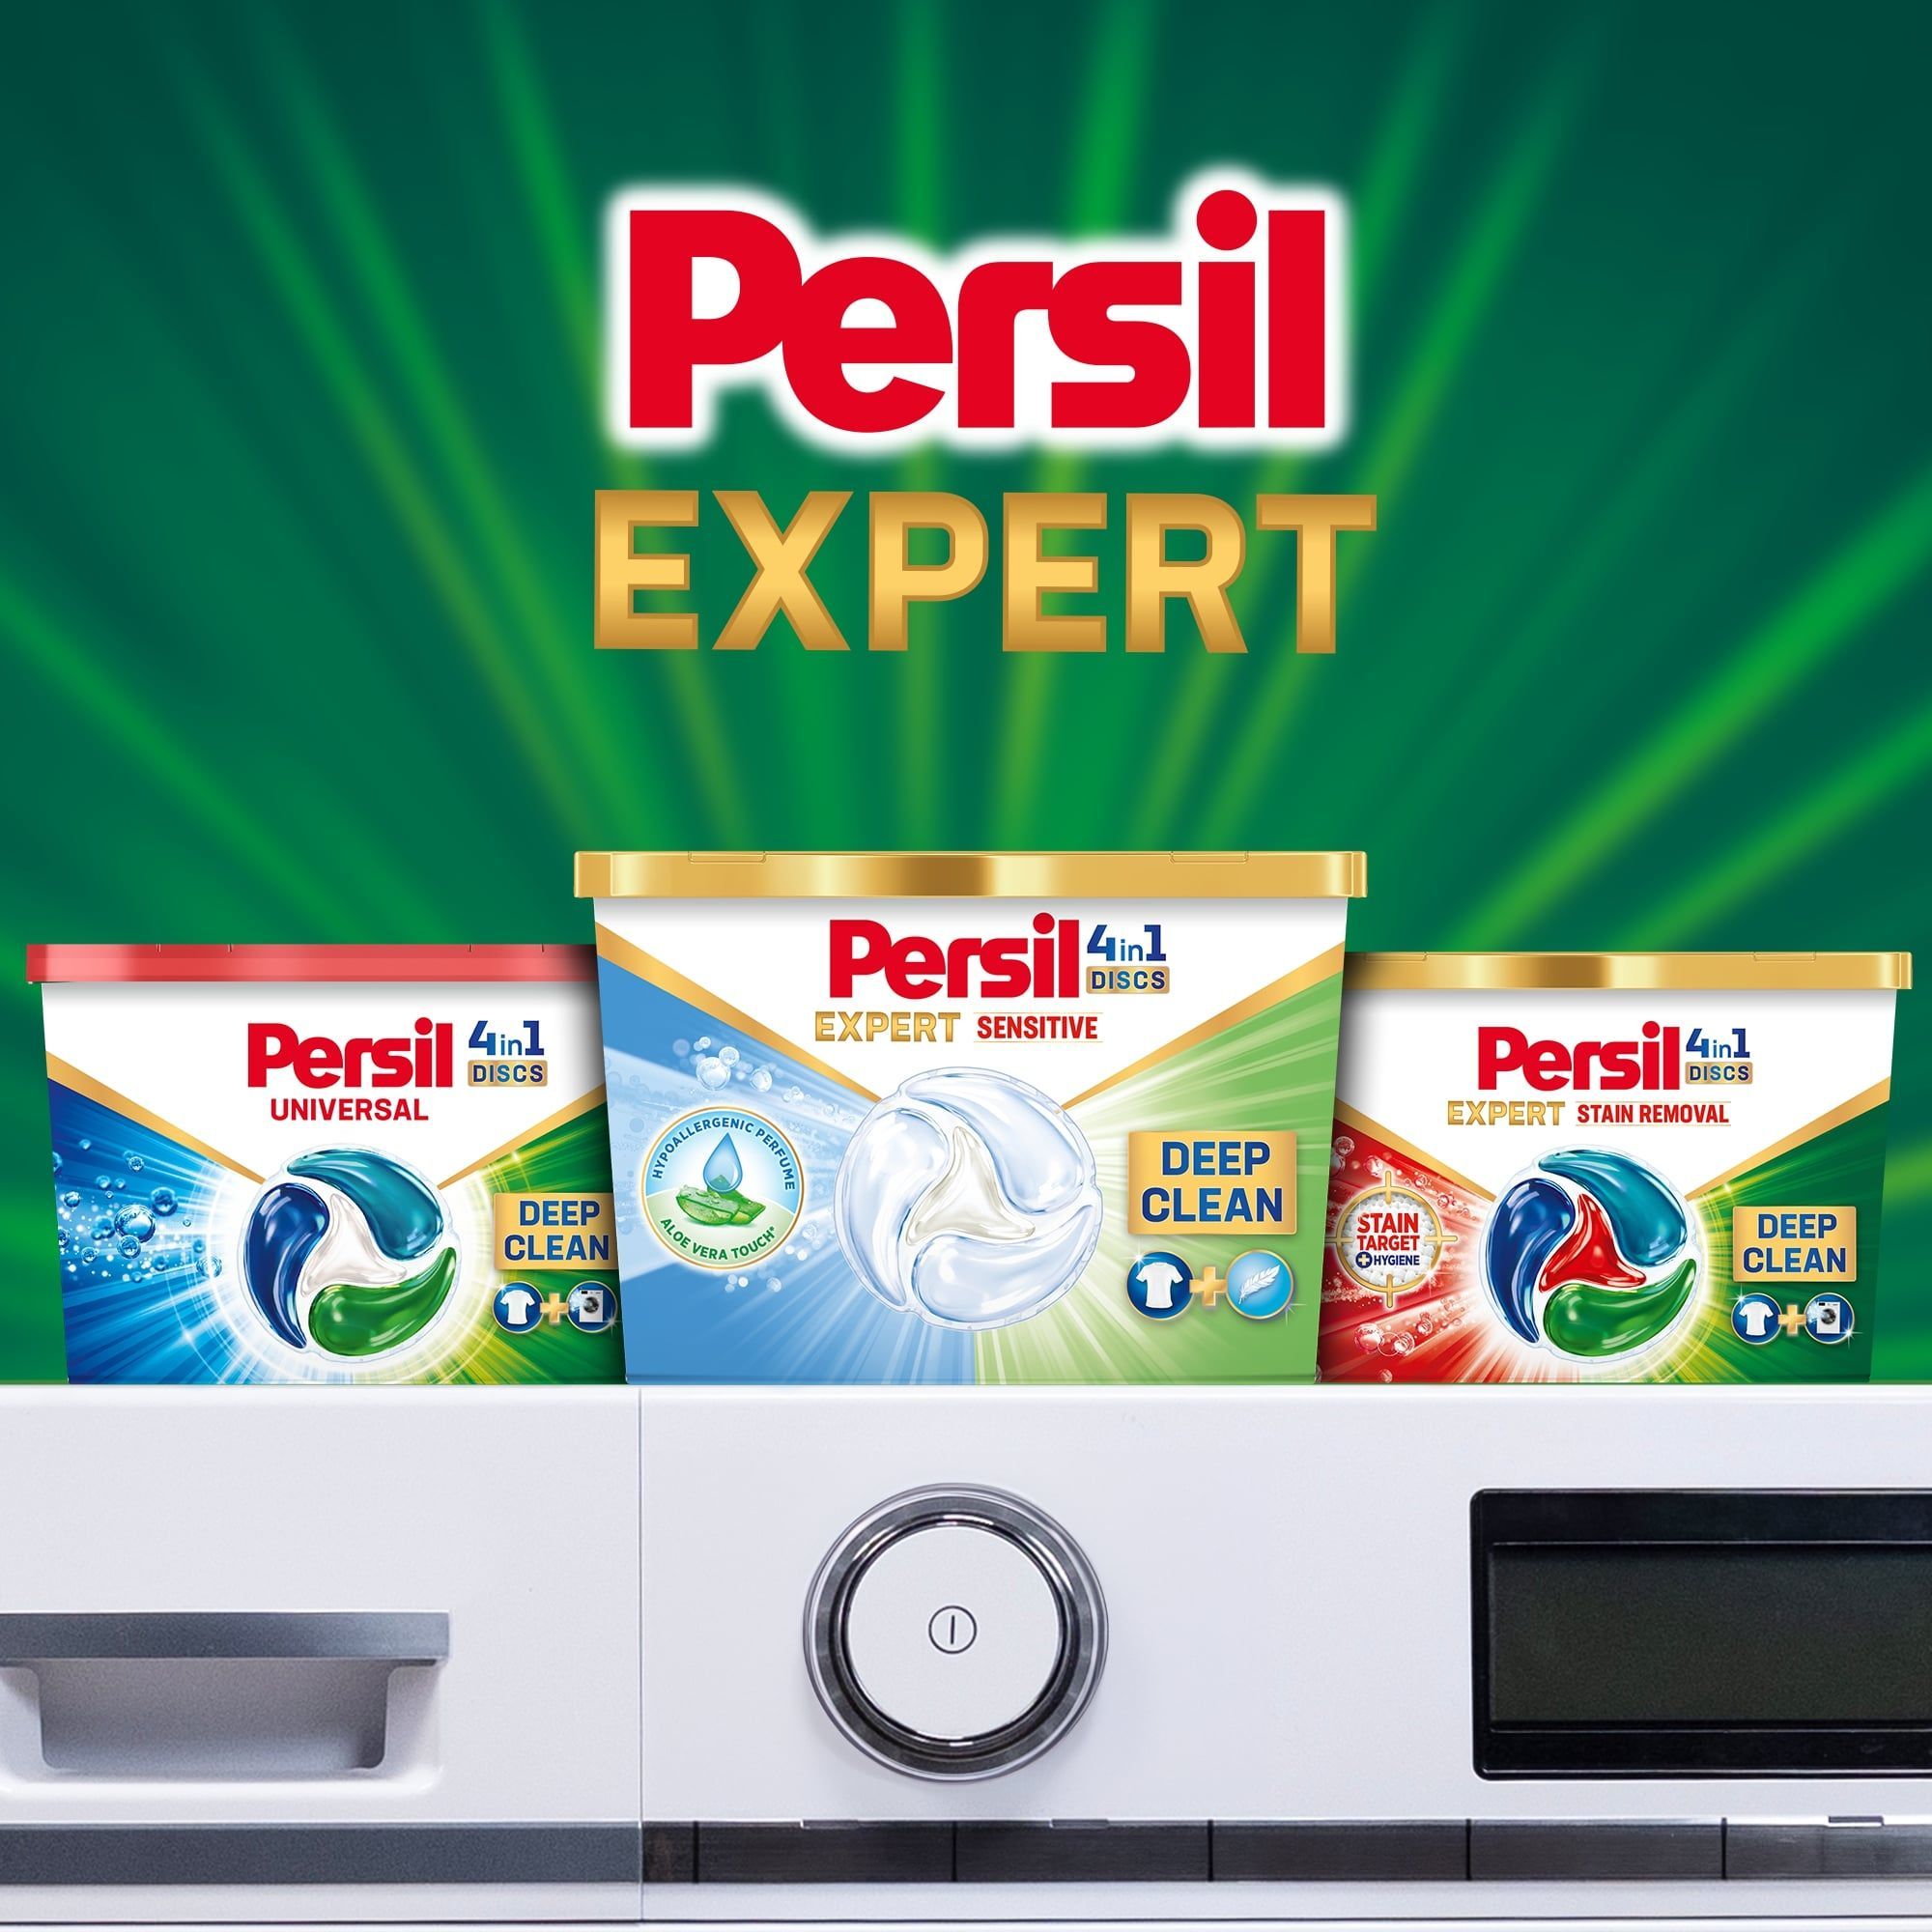 Диски для стирки Persil Expert Deep Clean Sensitive 4 in 1 Discs 34 шт. - фото 6